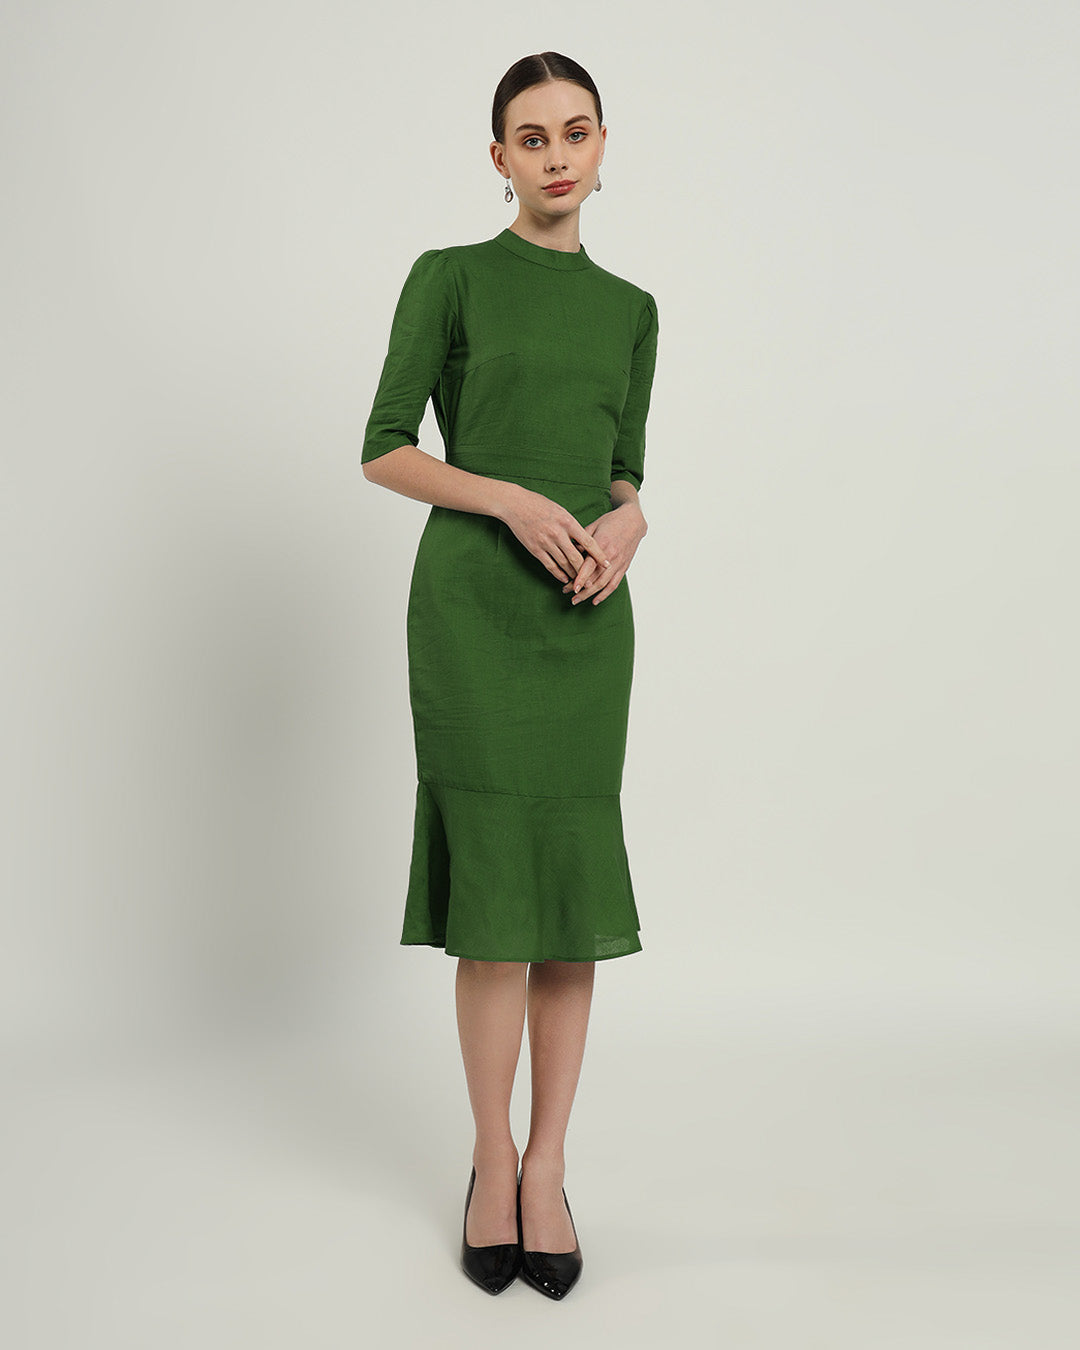 The Charlotte Emerald Dress